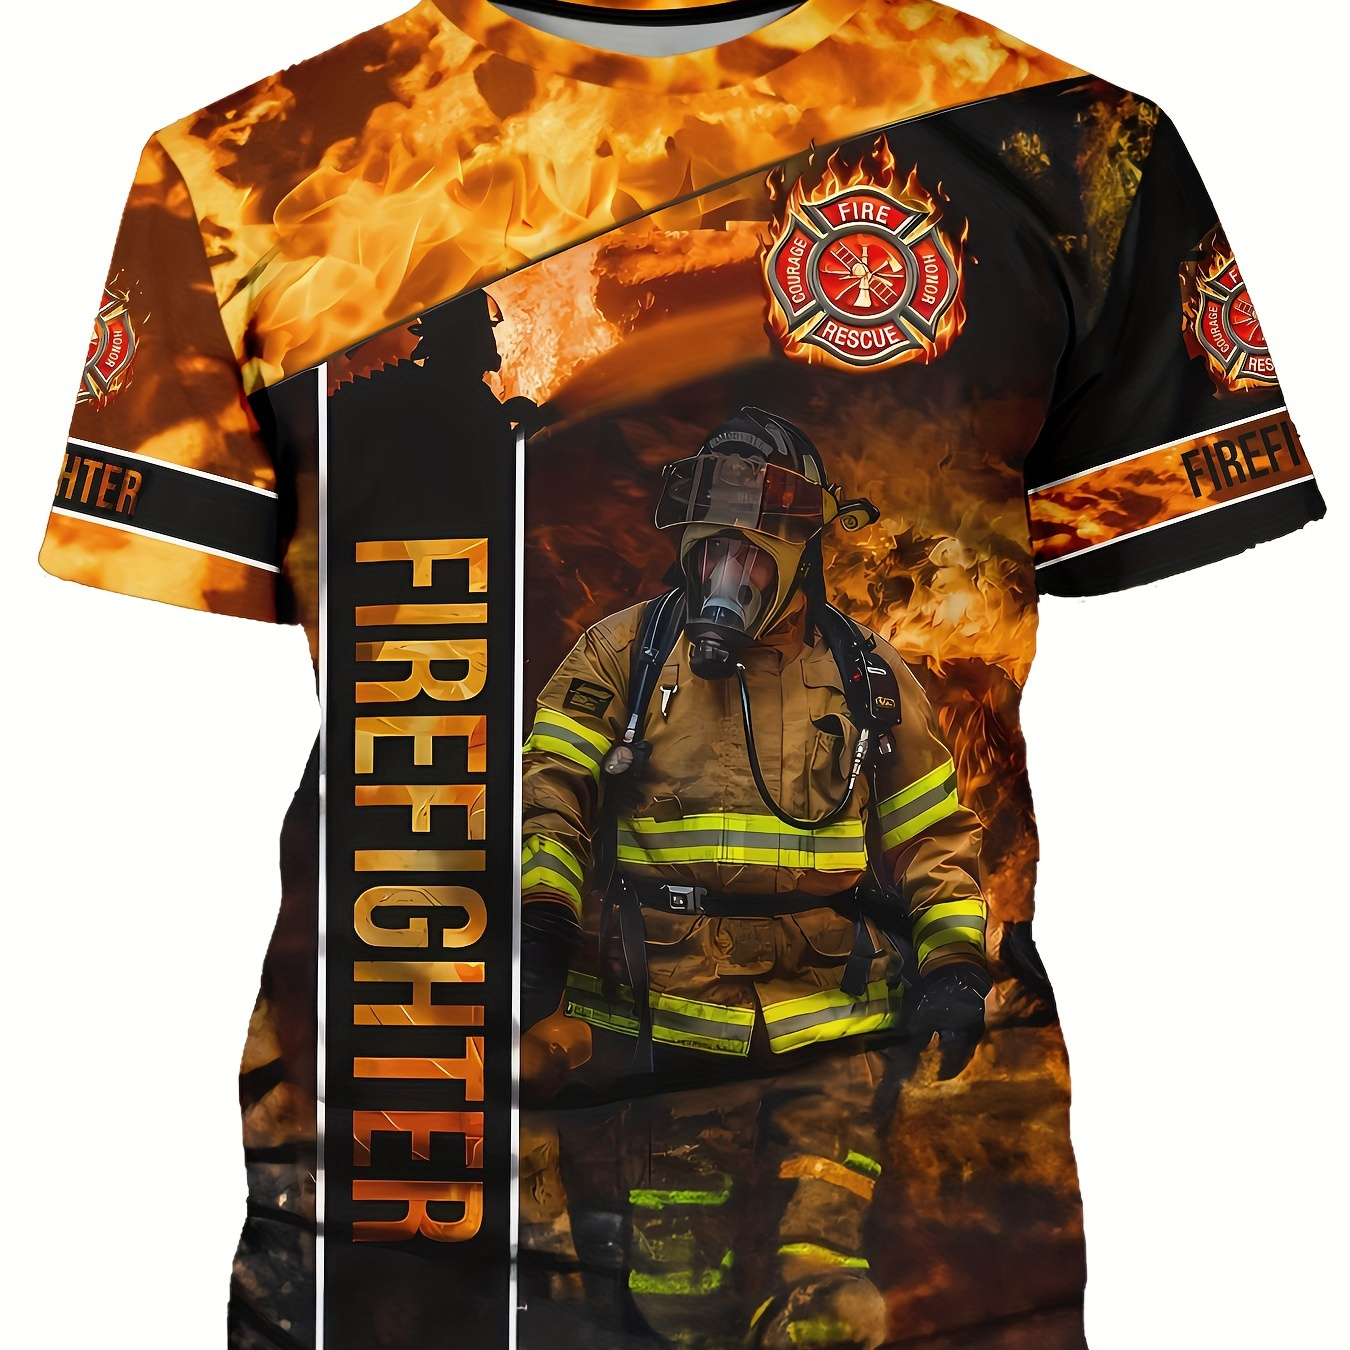 

Men's Fireman Print T-shirt, Casual Short Sleeve Crew Neck Tee, Men's Clothing For Outdoor